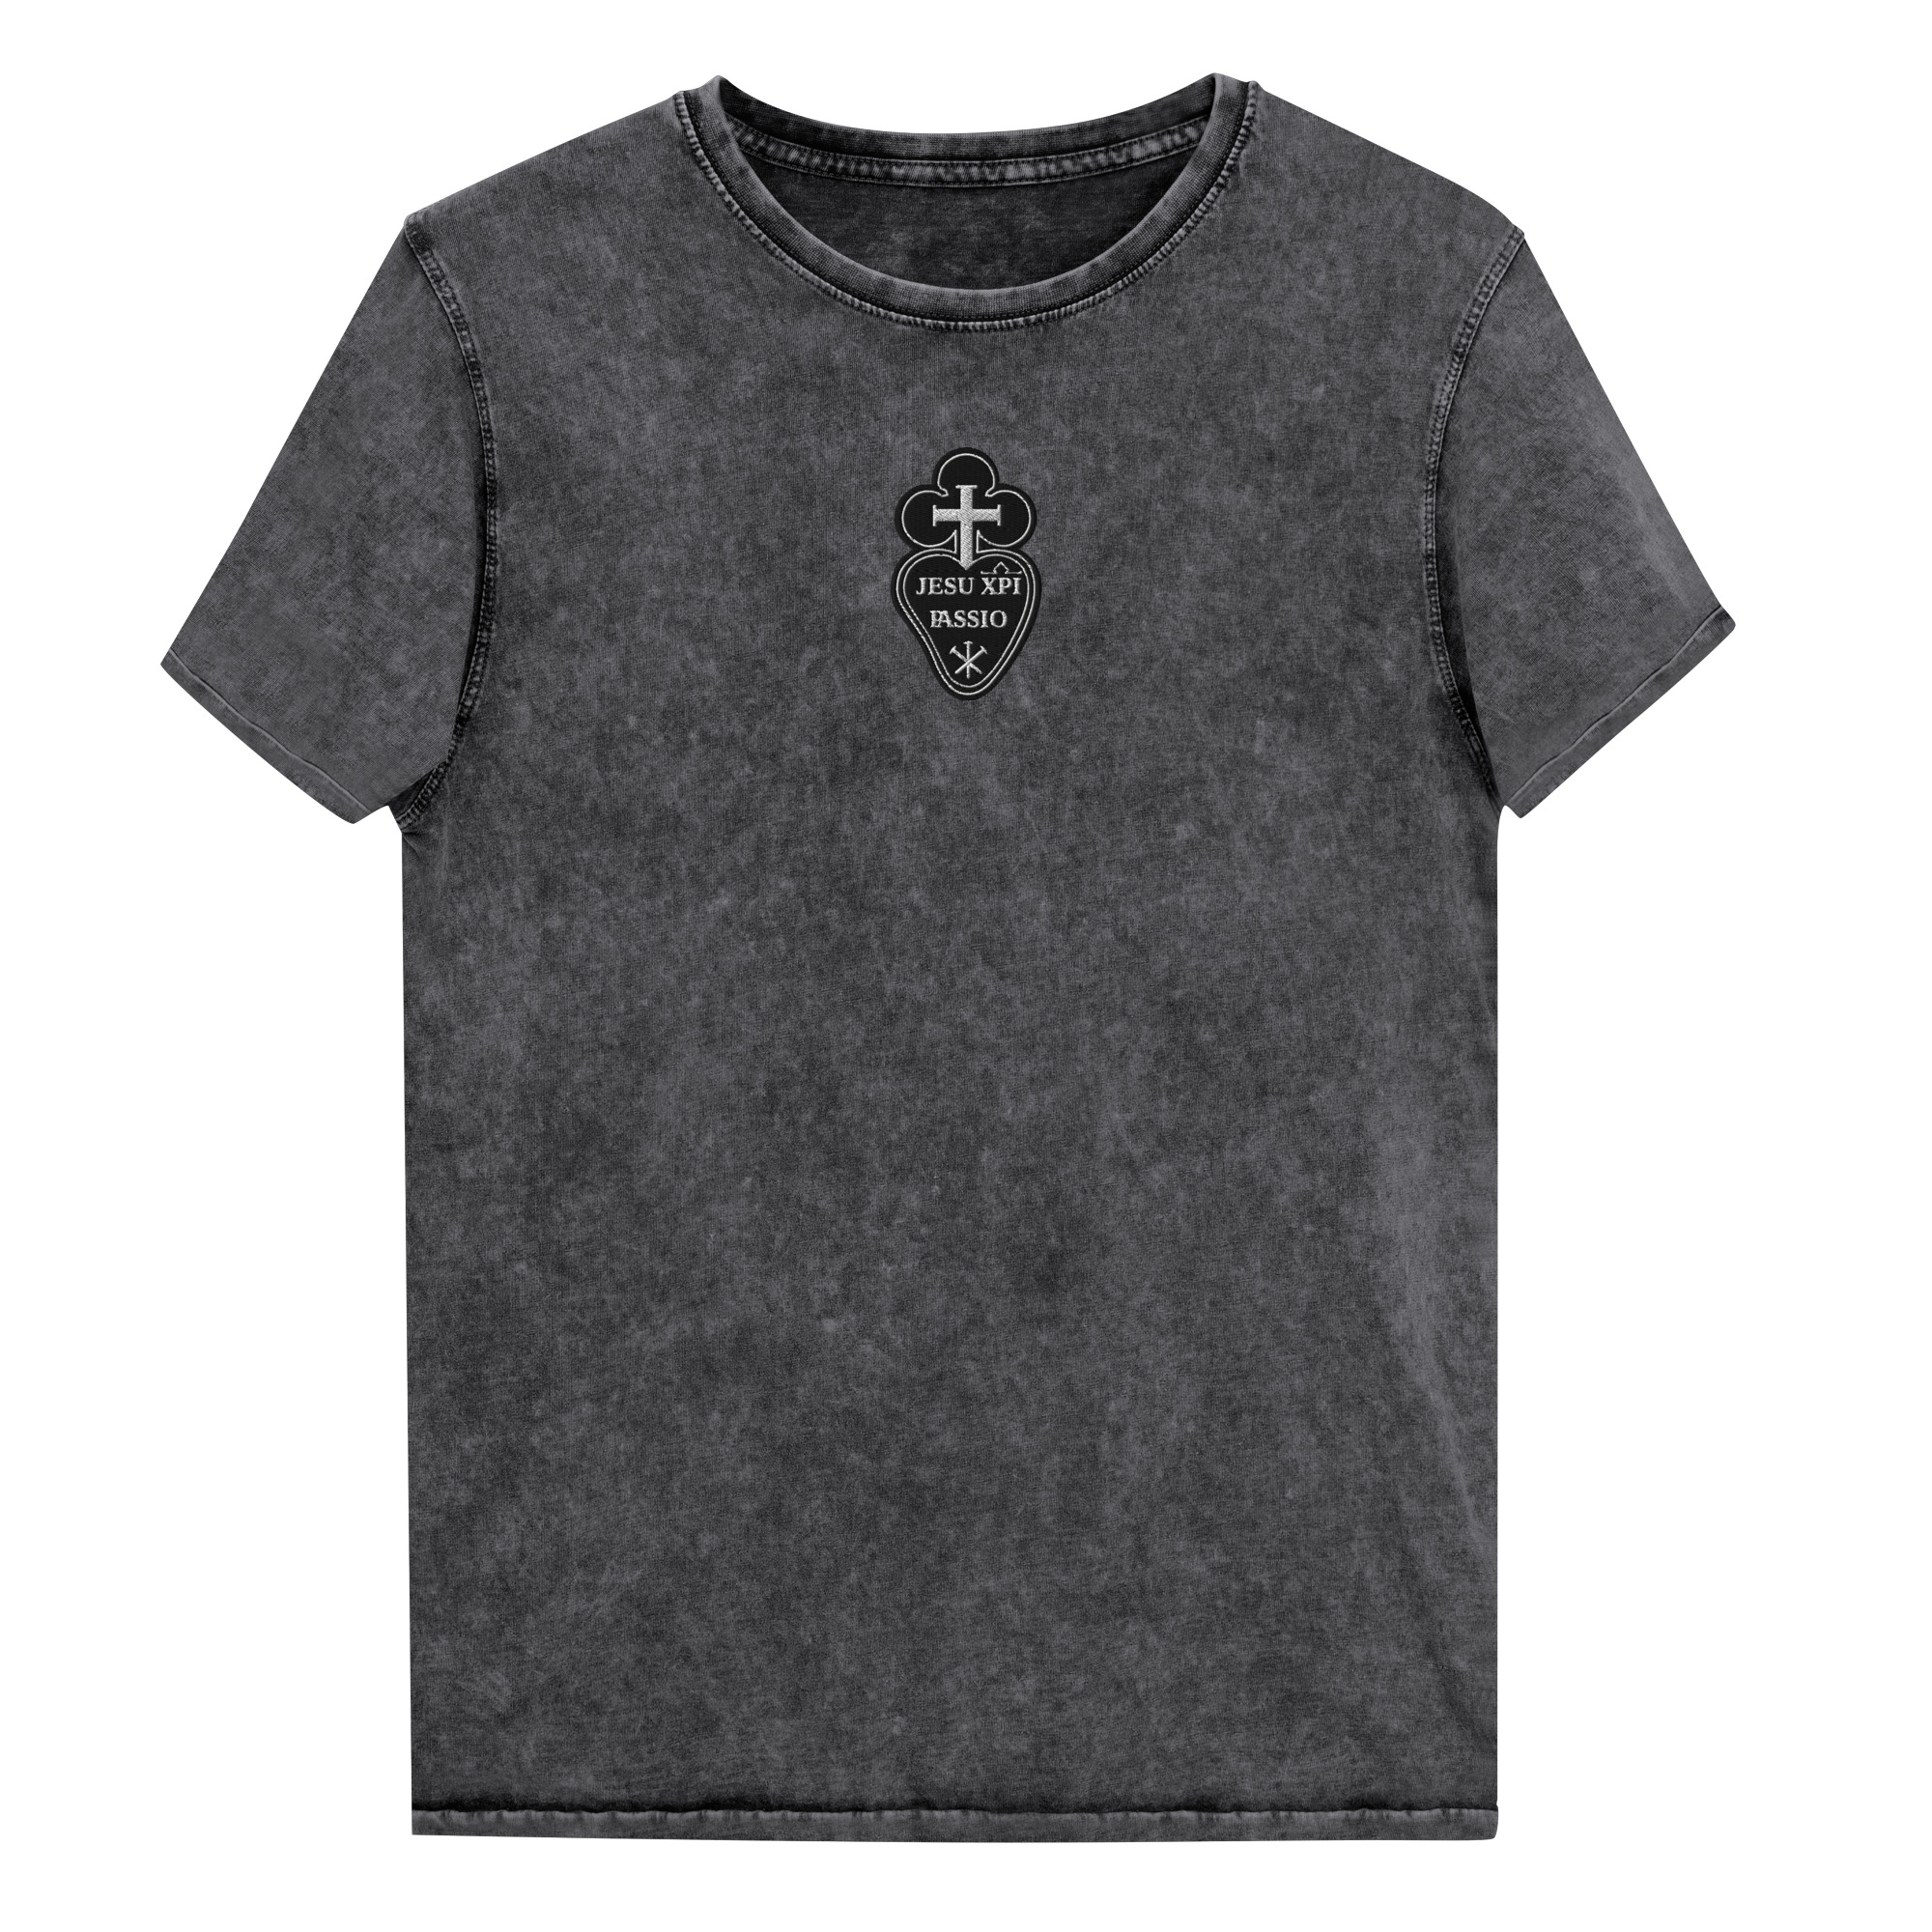 Jesu XPI Passio – Passionist Sign Embroidered Denim T-Shirt